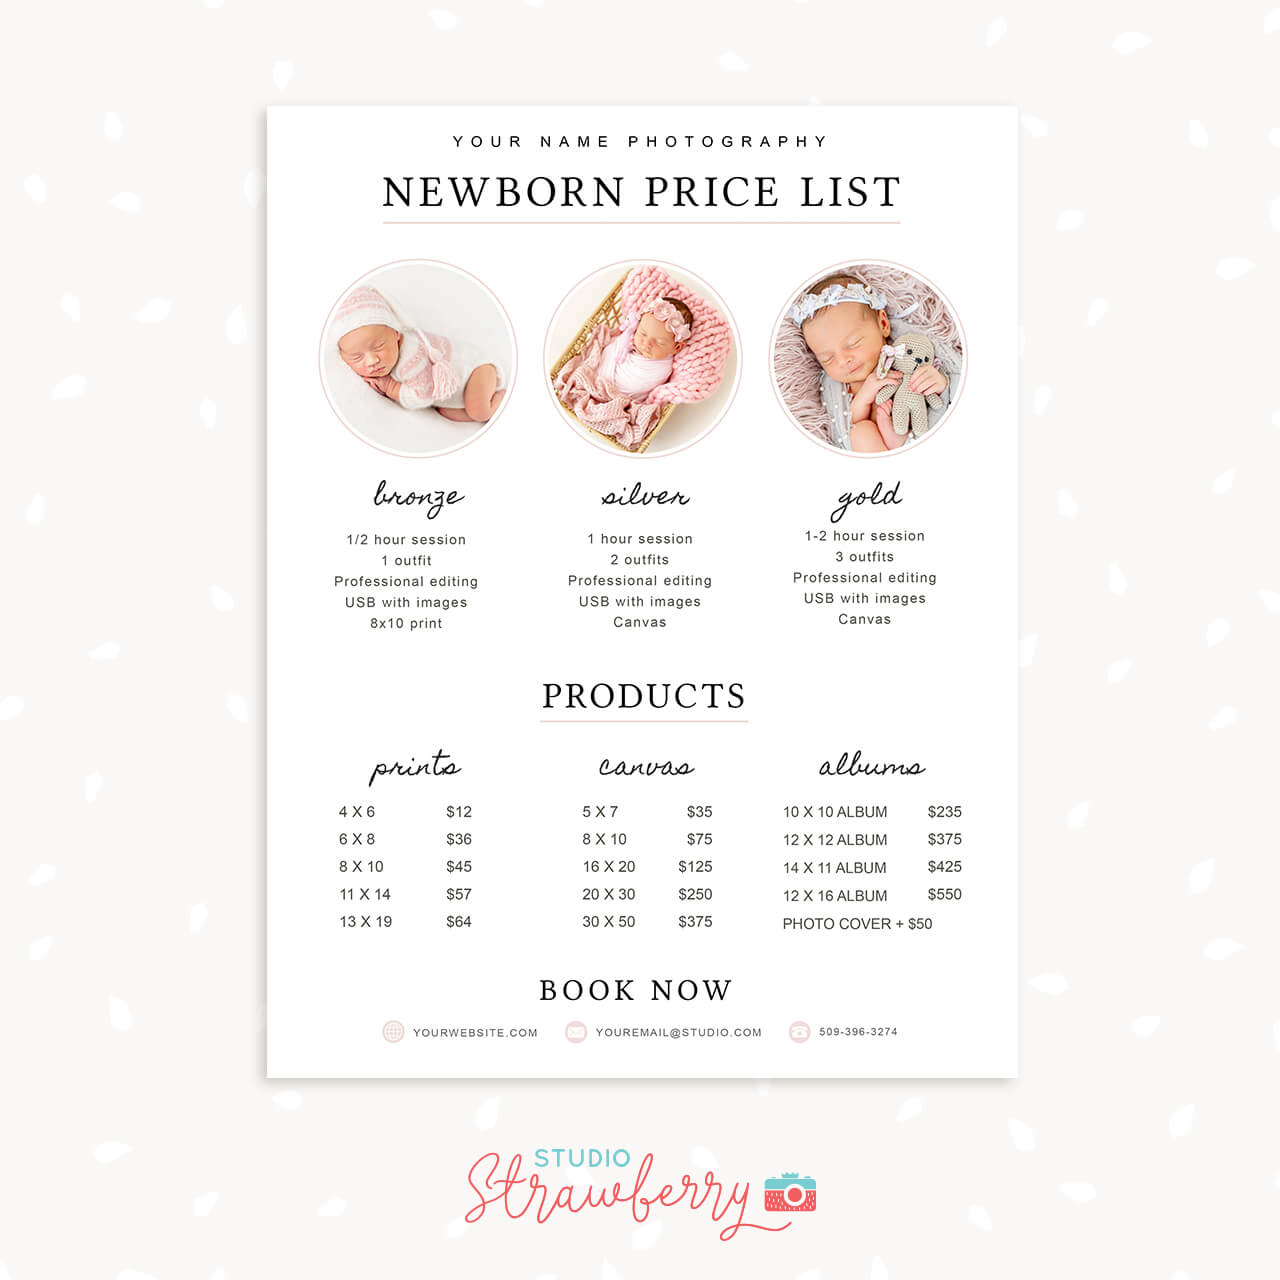 Newborn photography price list template